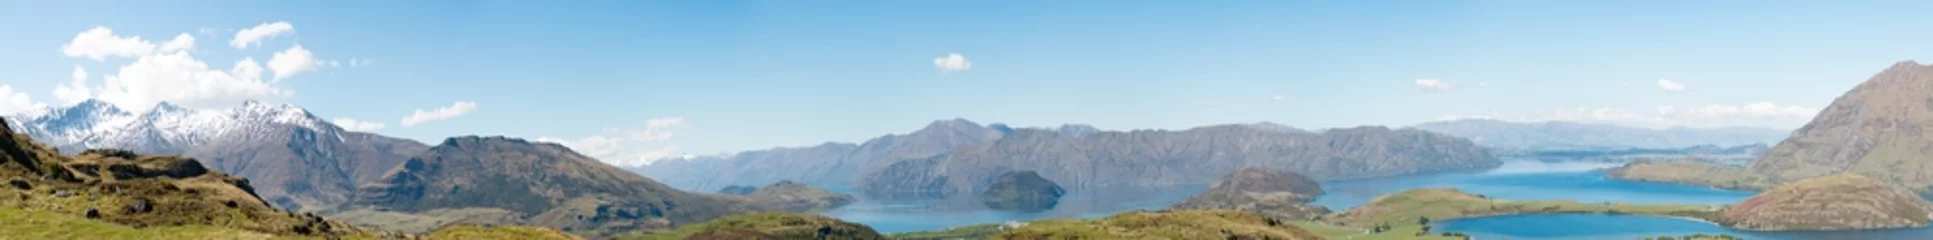 Foto auf Leinwand Neuseeland Lake Wanaka Berglandschaft Mount Aspiring National Park und Diamond Lake © Bjoern